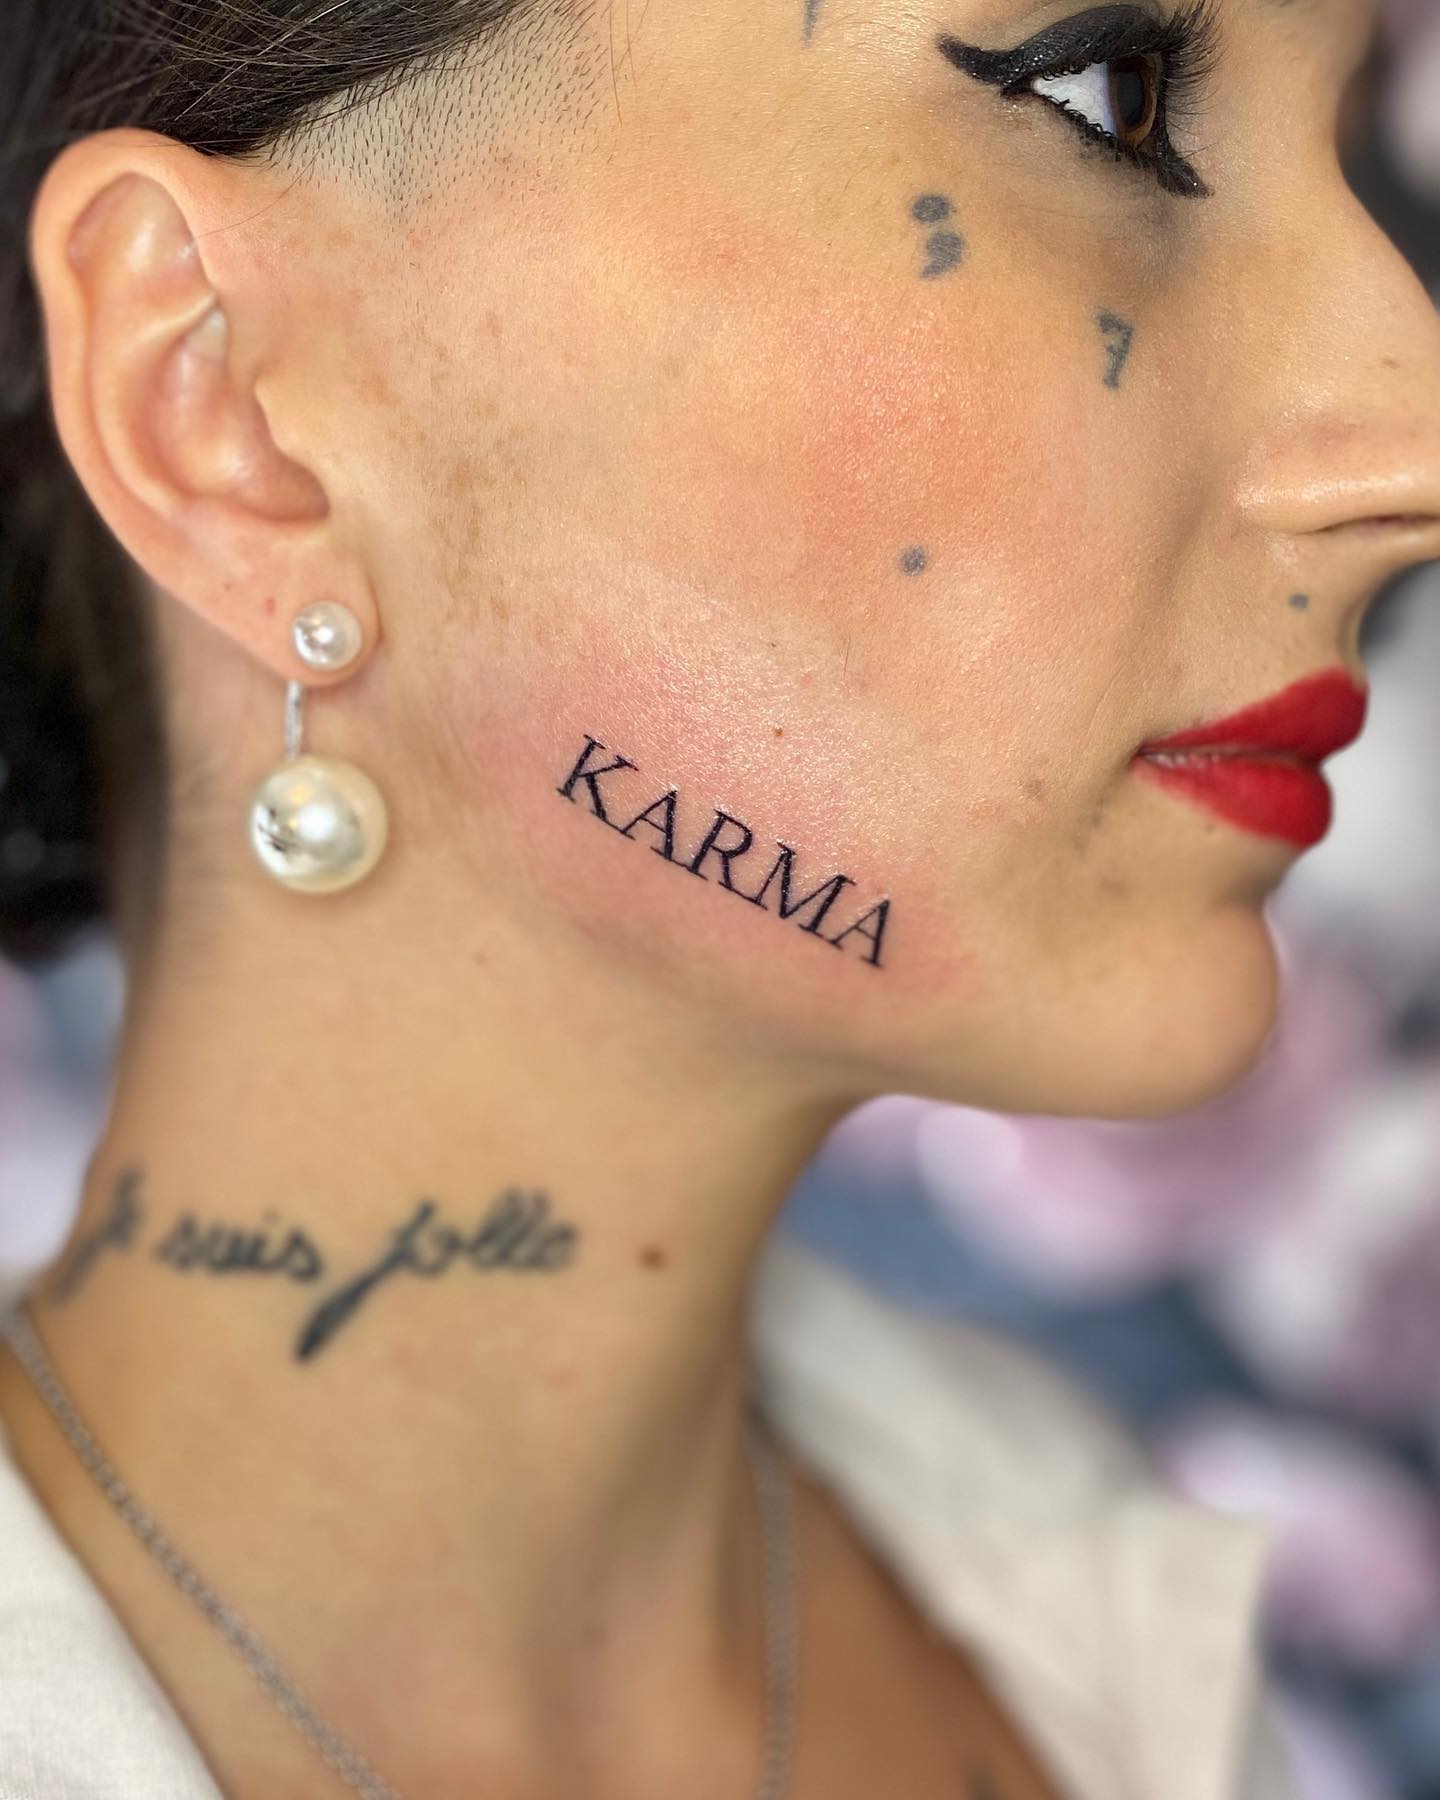 Tatuaje facial de karma